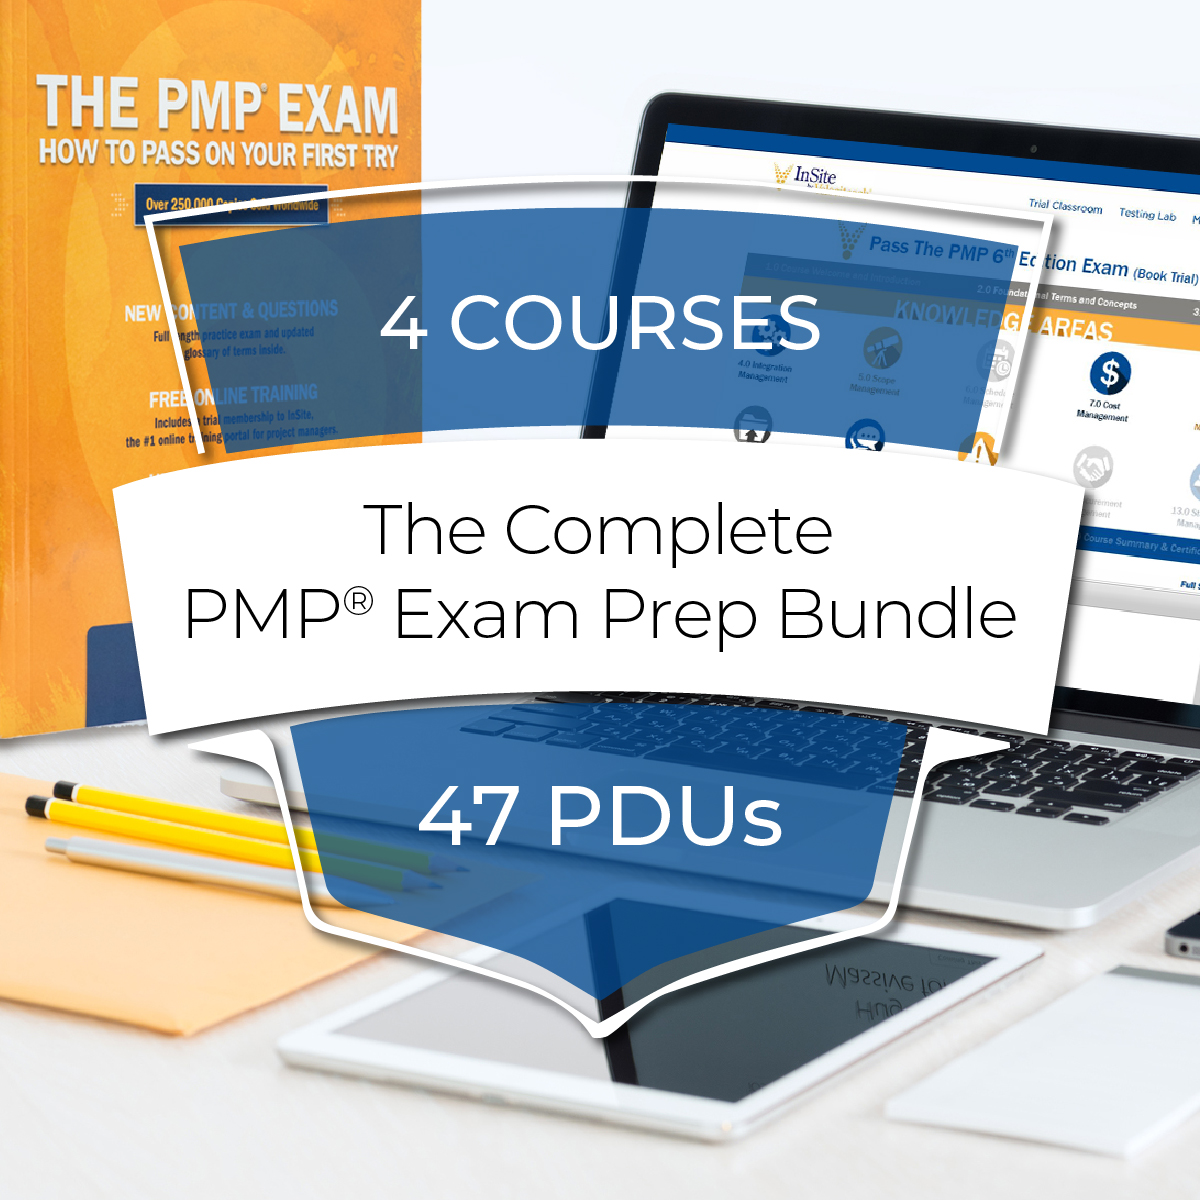 The Complete PMP® Exam Prep Bundle